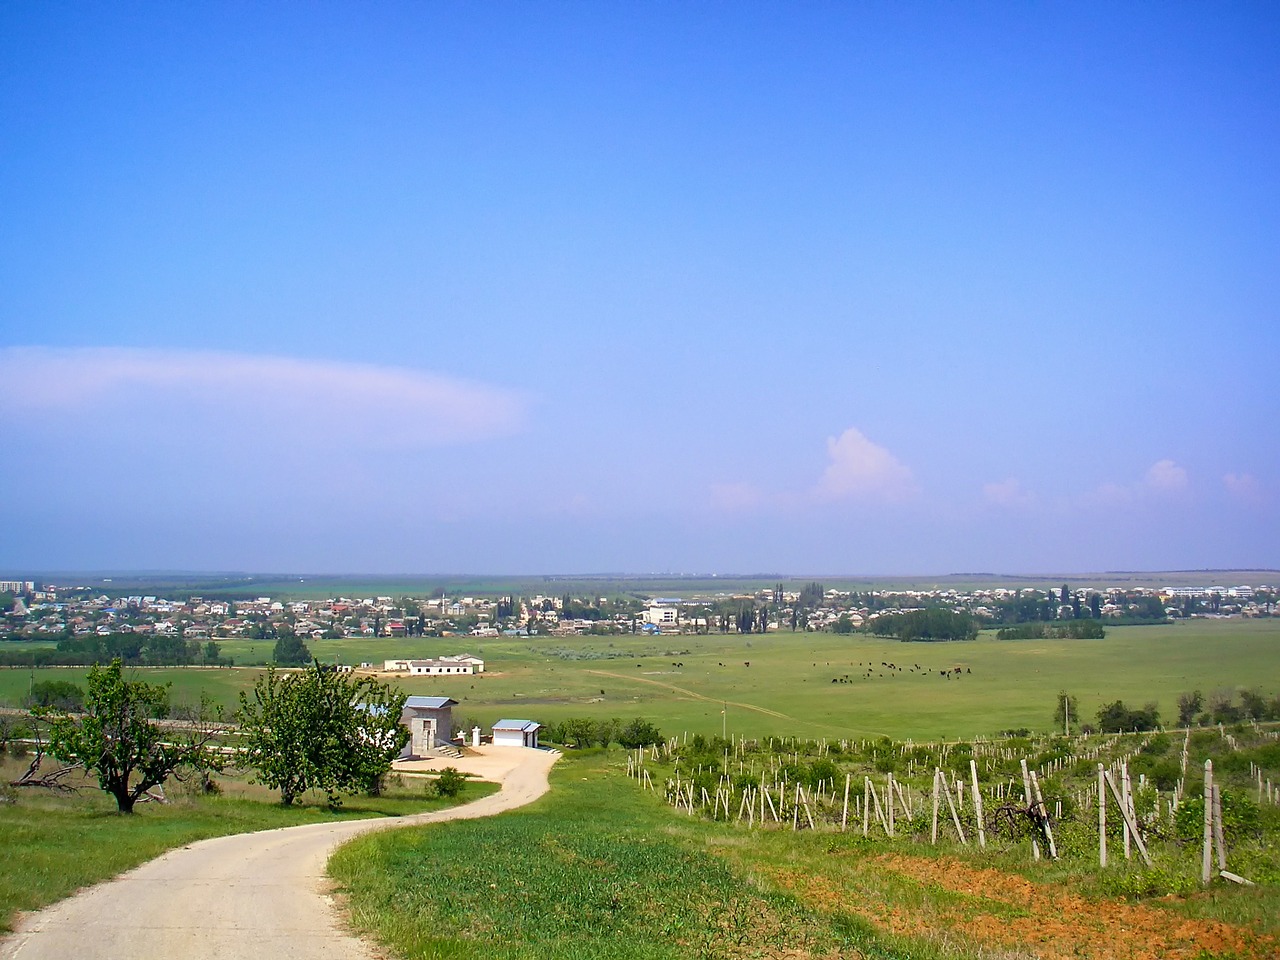 vilino belarus landscape free photo